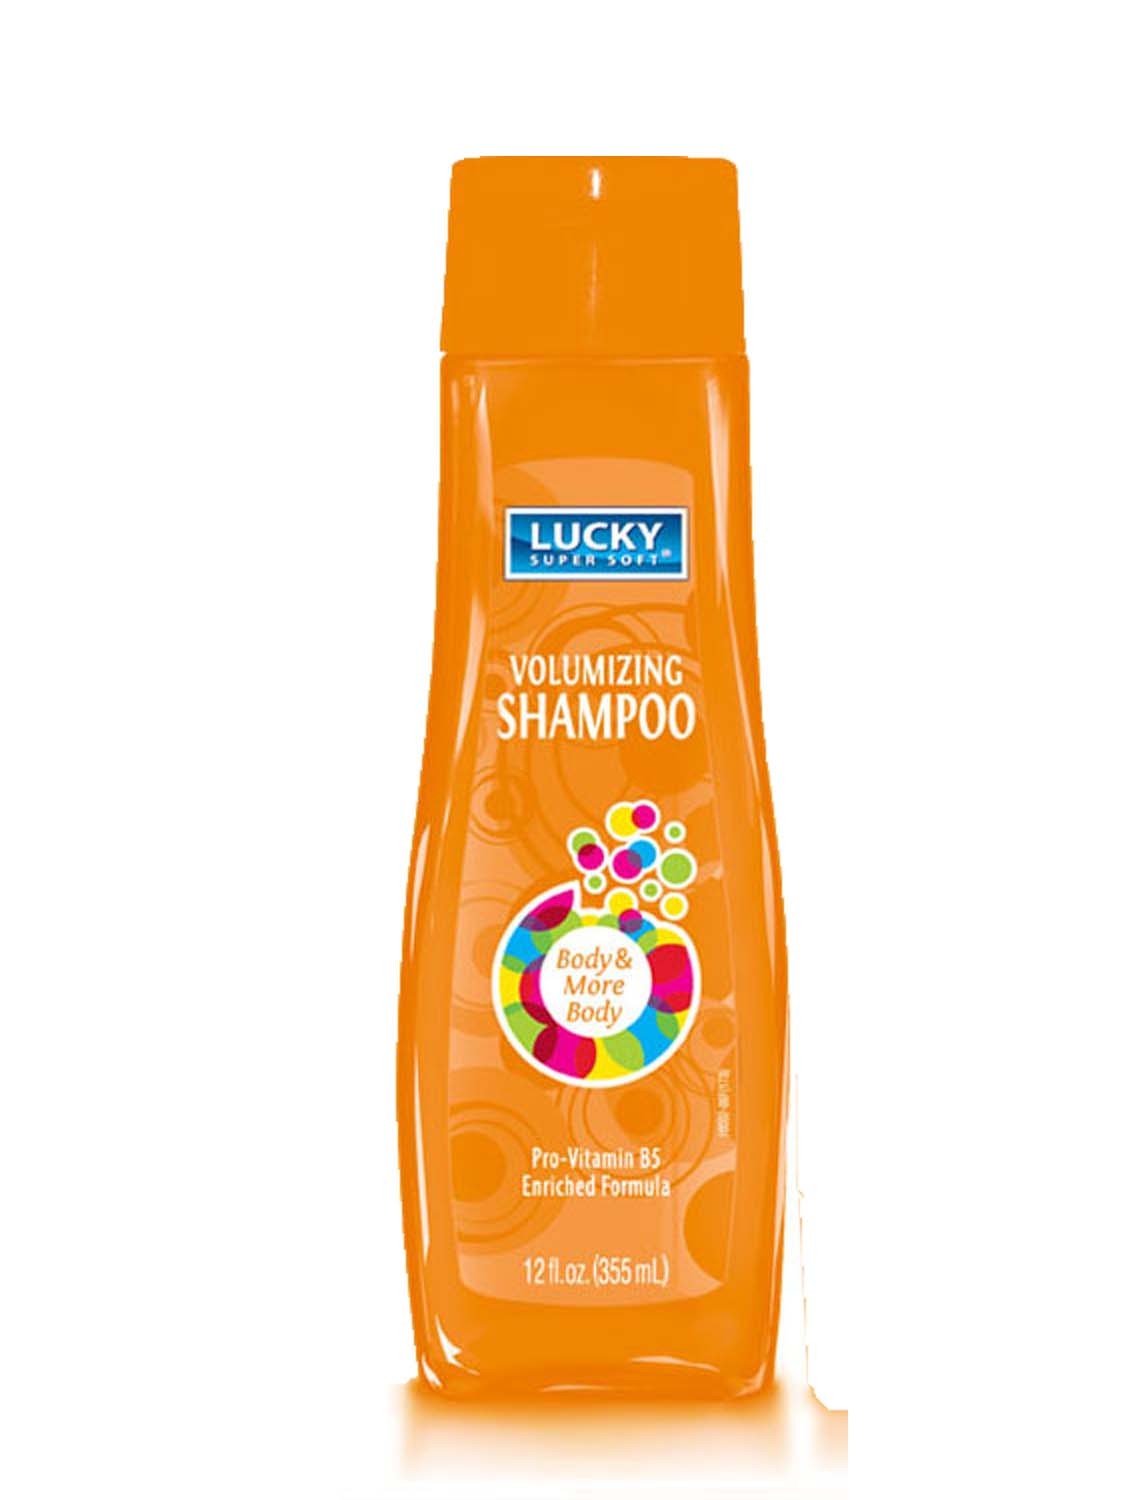 LUCKY  Volumizing Shampoo